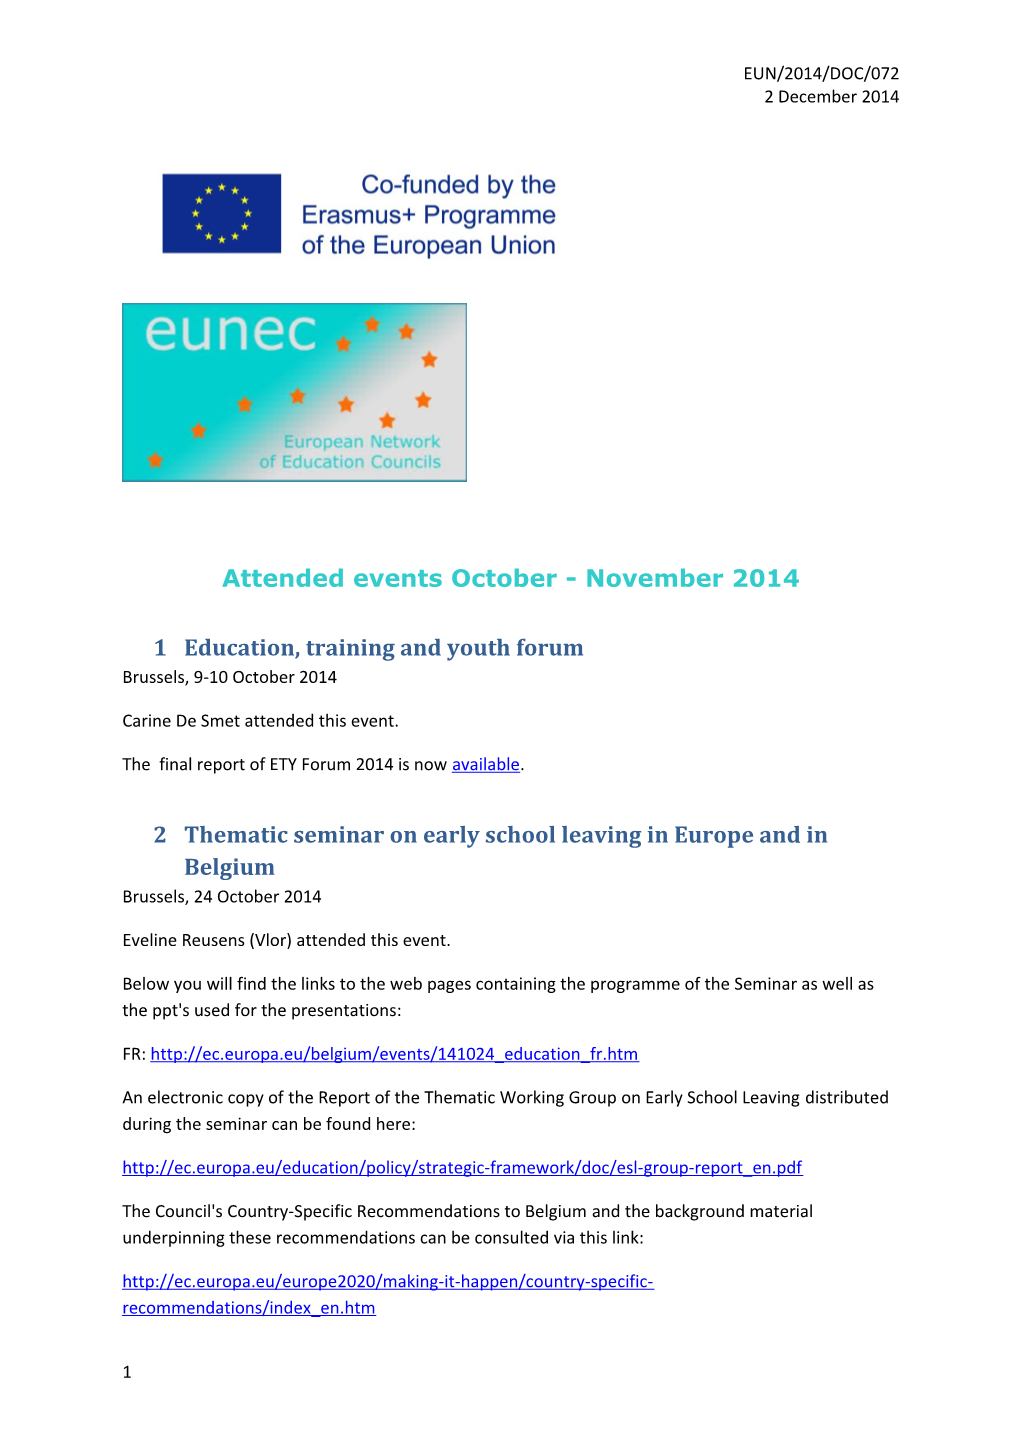 Attended Events October - November 2014